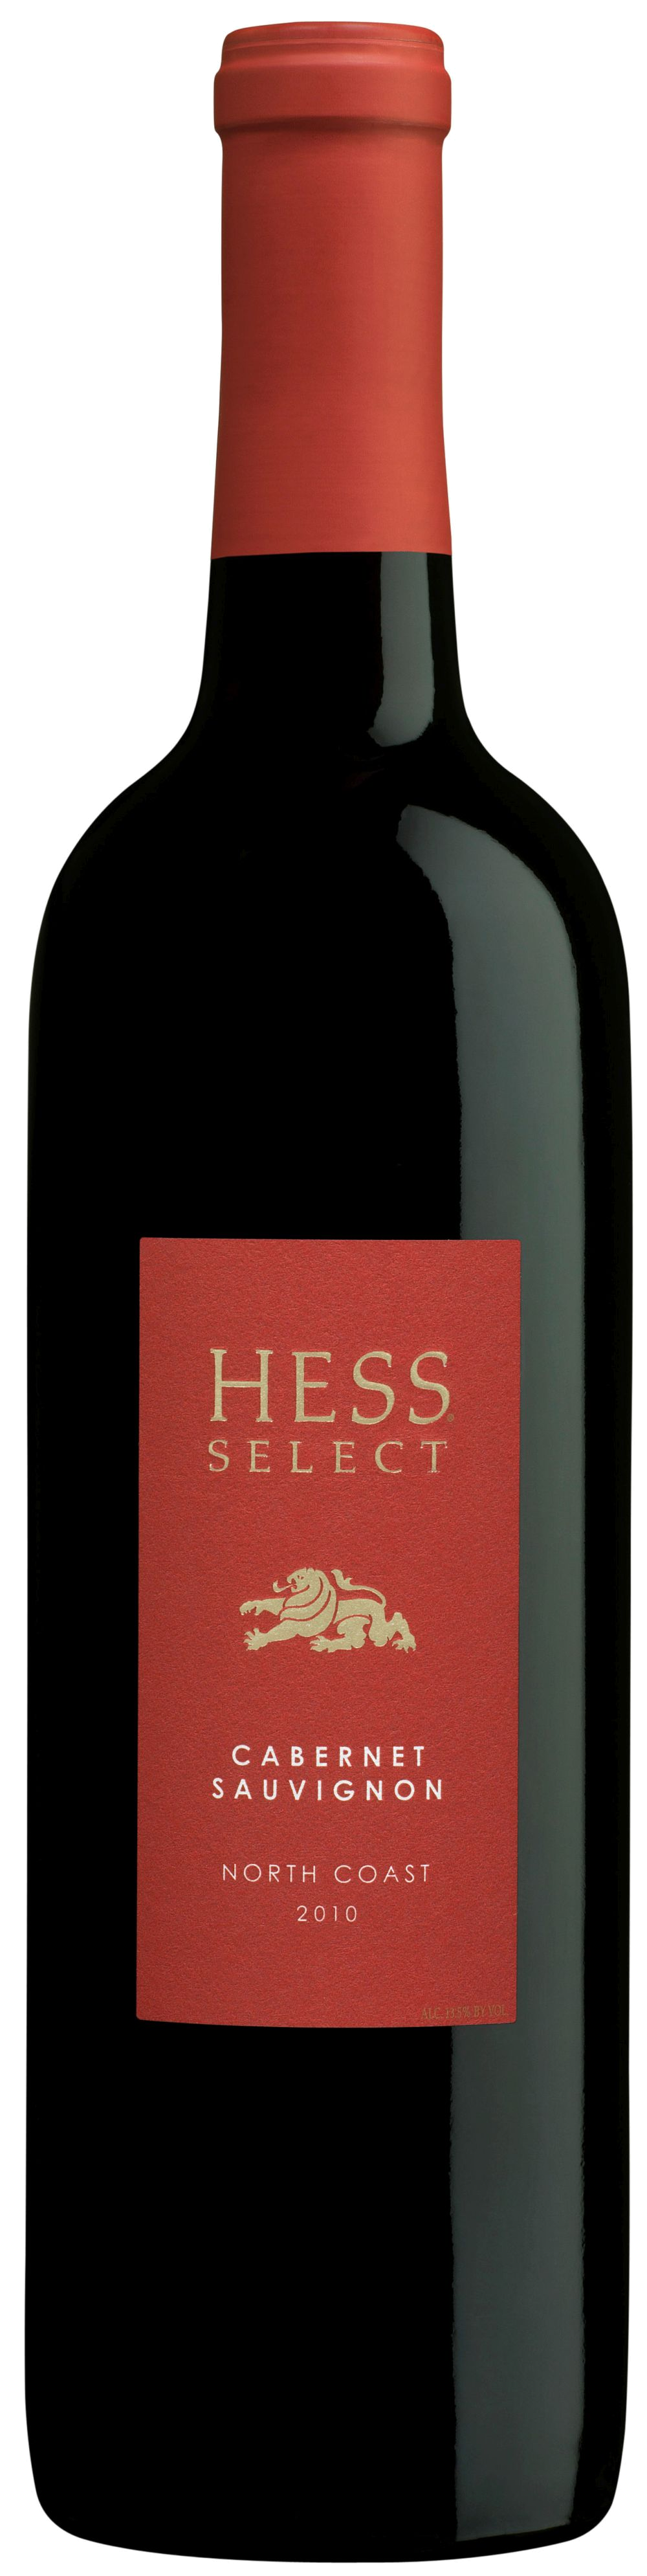 HESS Select Cabernet Sauvignon